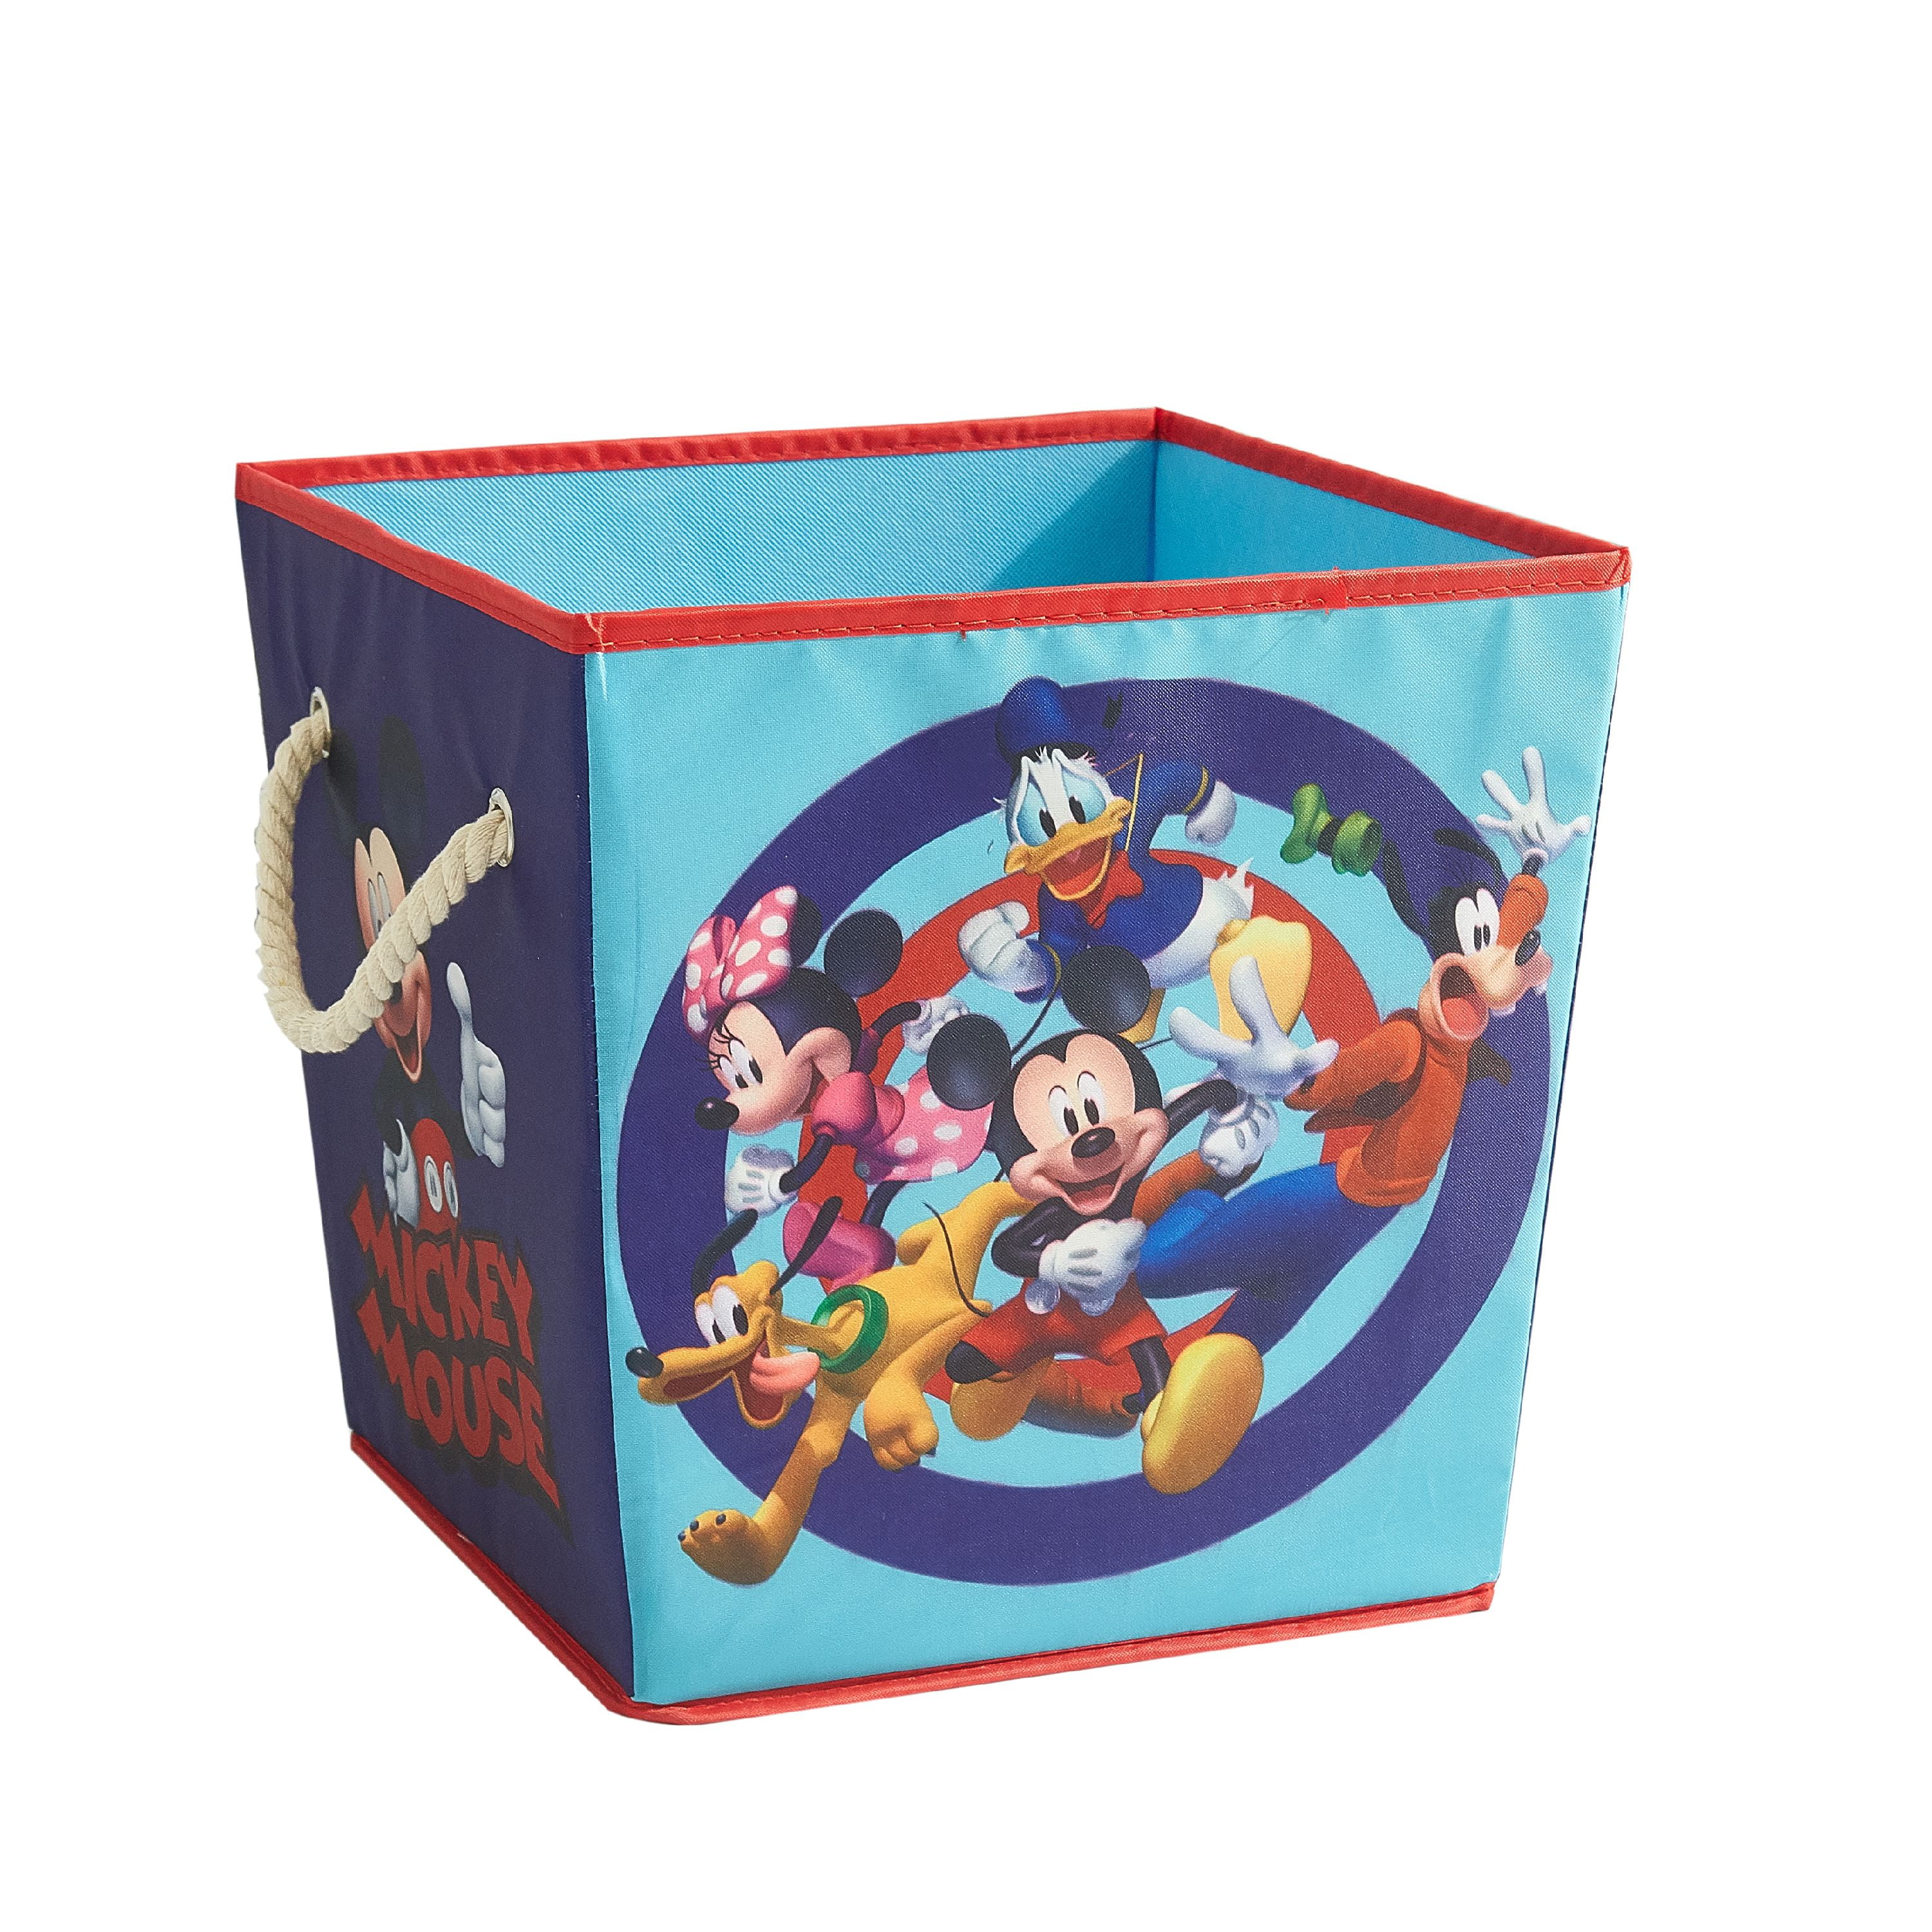 New 2pc Red Mickey Mouse Storage Toy Box Organizer Bin Storage Trunk Chest Cube 